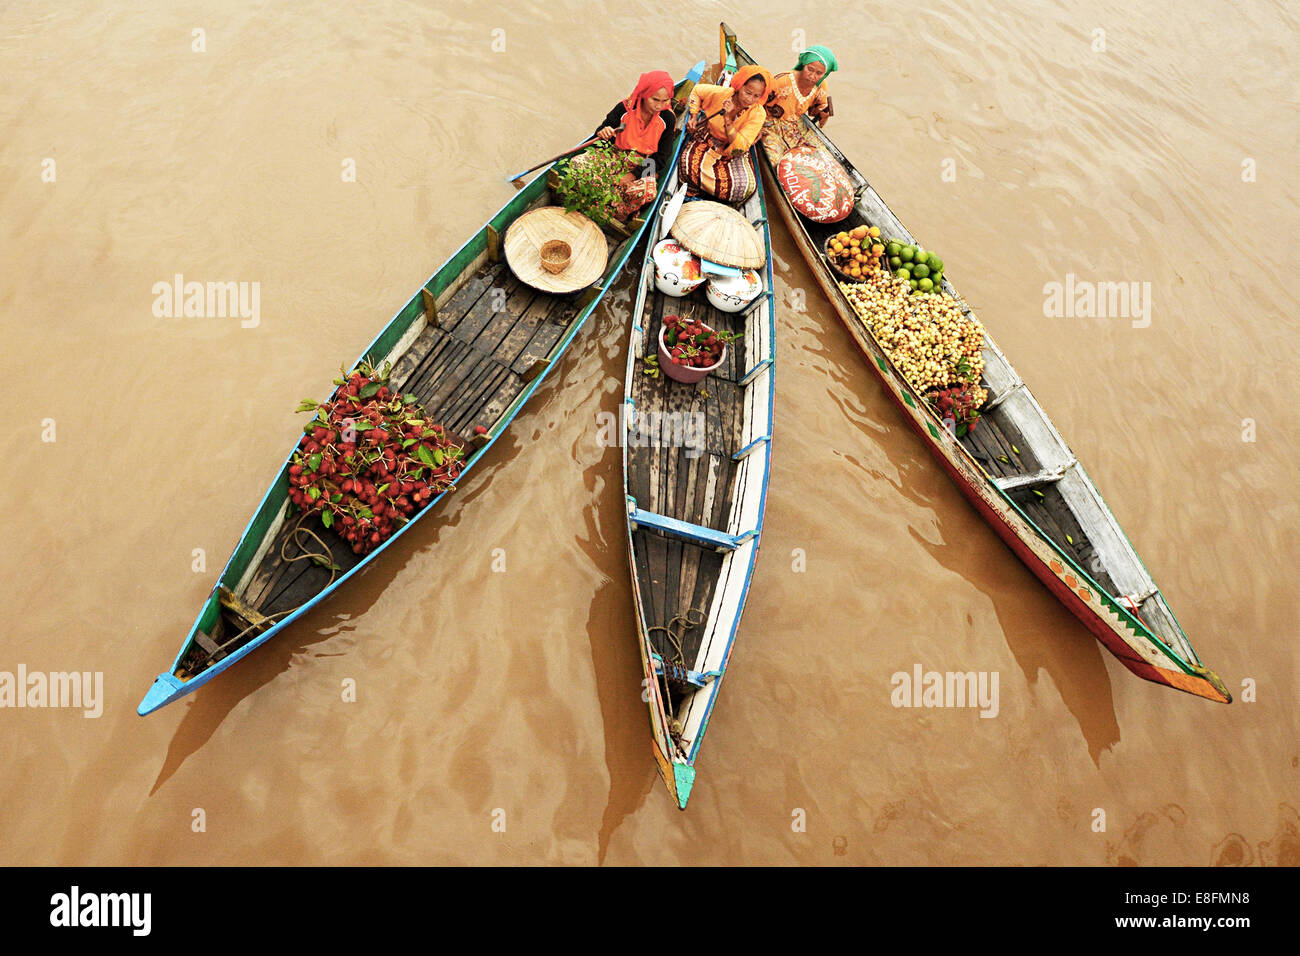 Indonesia, South Kalimantan province, Lok Baintan, Floating Market Stock Photo